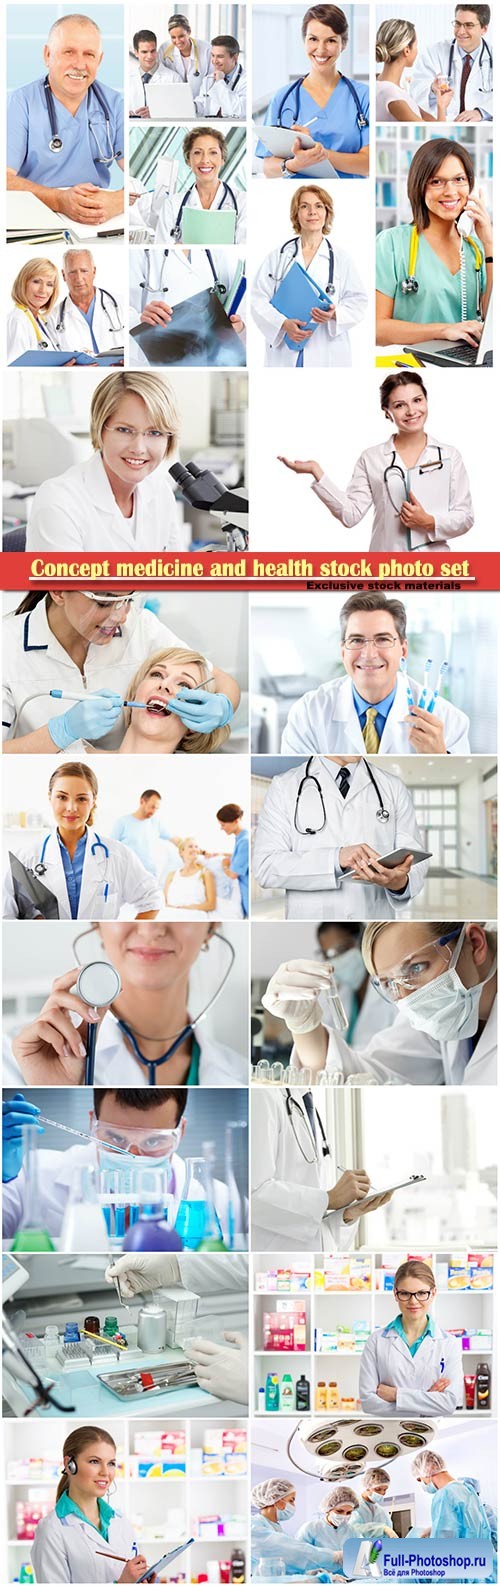 Concept medicine and health stock photo set